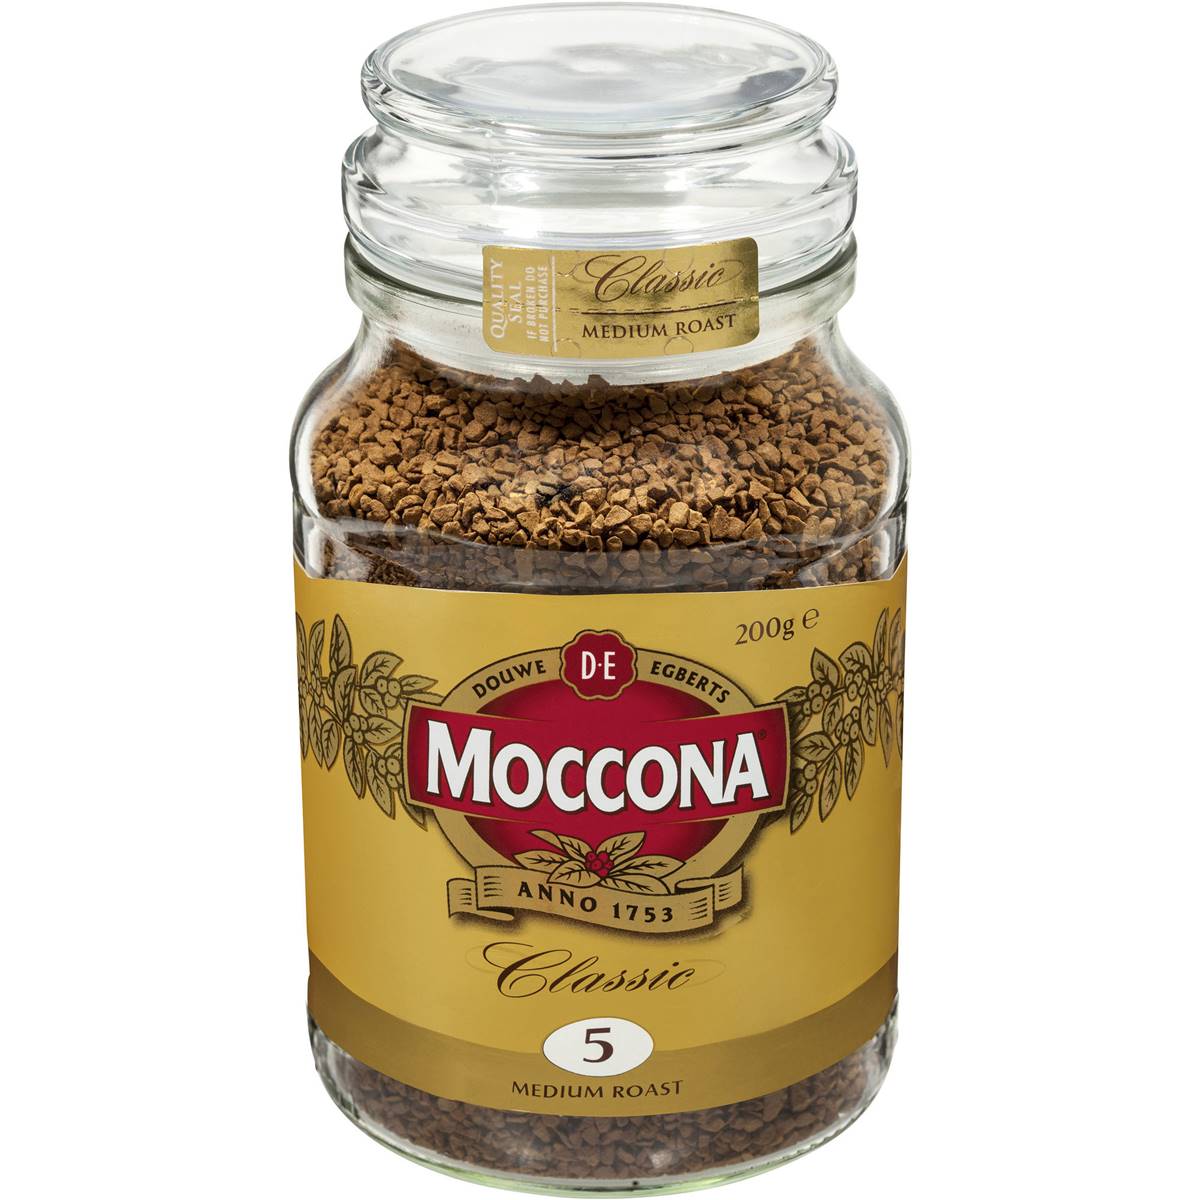 Moccona Classic No. 5 Medium Roast Freeze Dried Coffee 200g